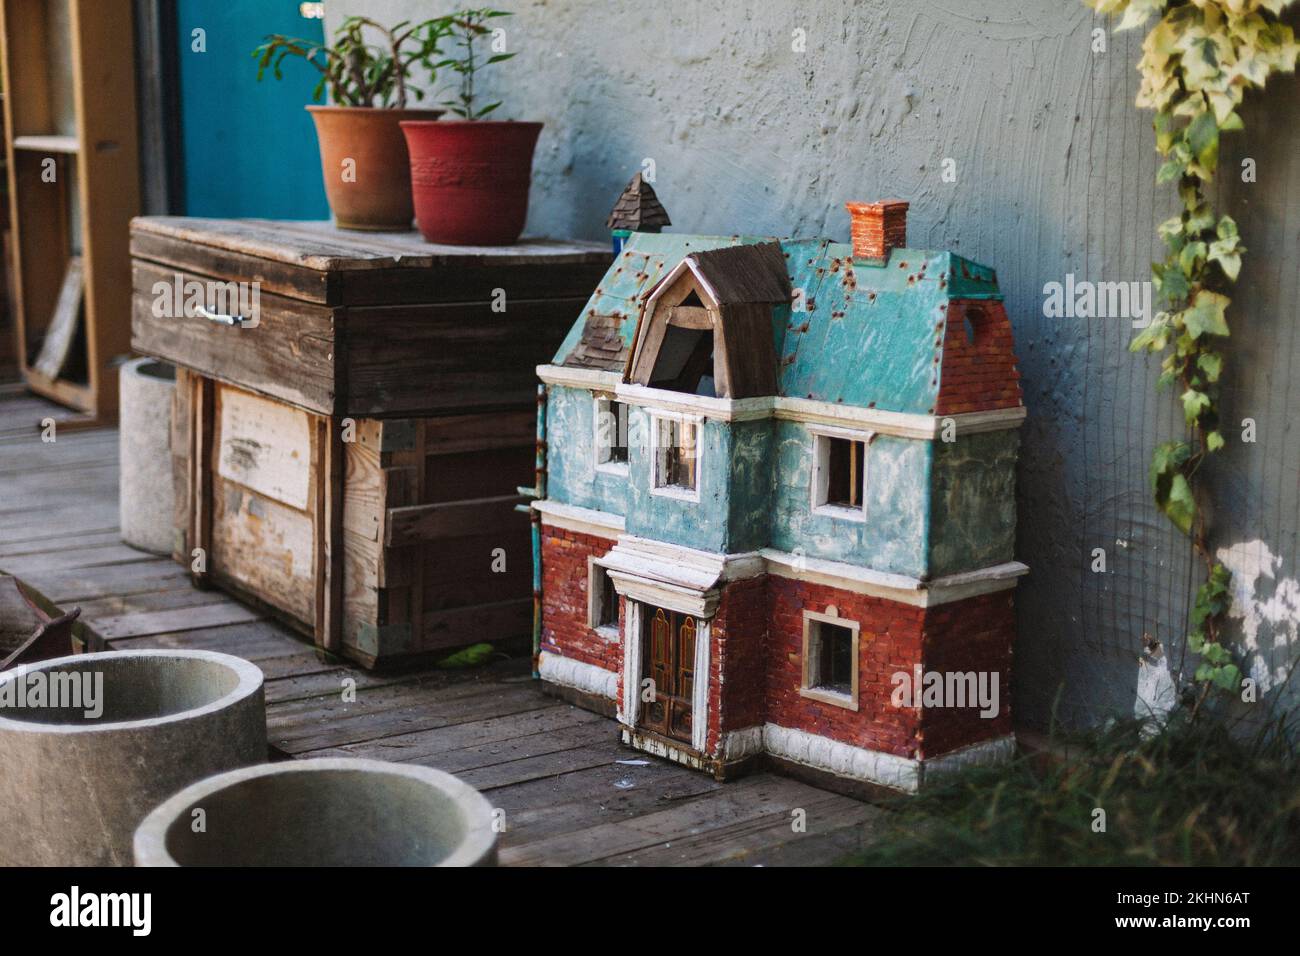 Antigua casa de muñecas fotografías e imágenes de alta resolución - Alamy